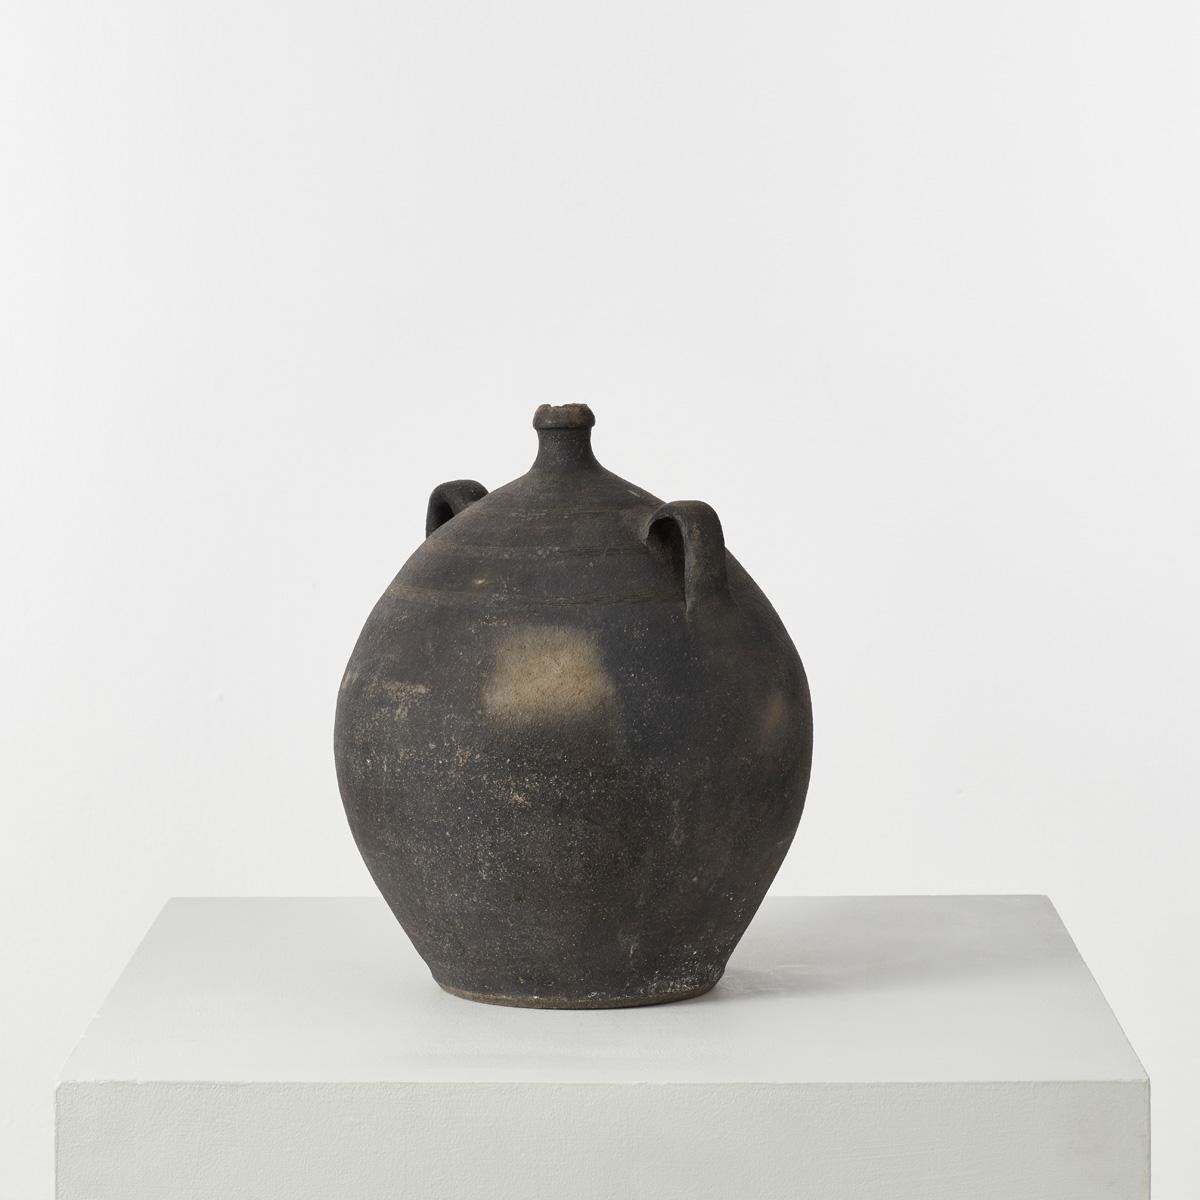 Rustic Nineteenth-Century Antique Black Terracotta Cosi Pot/Vase from Catalonia